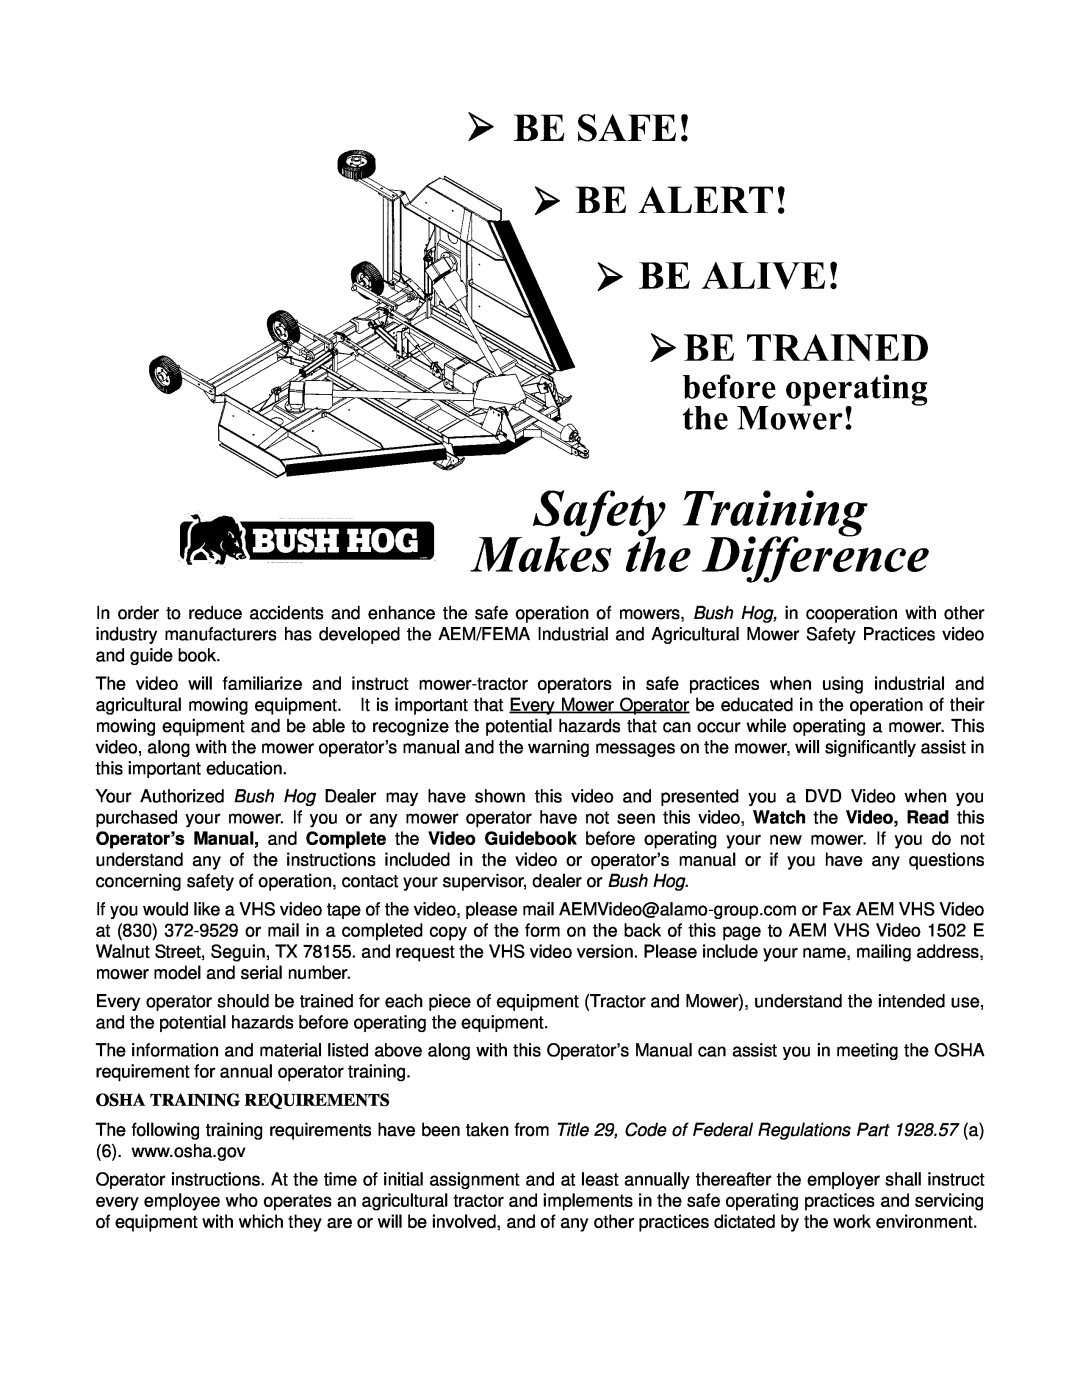 Bush Hog RMB 1865 manual Osha Training Requirements 